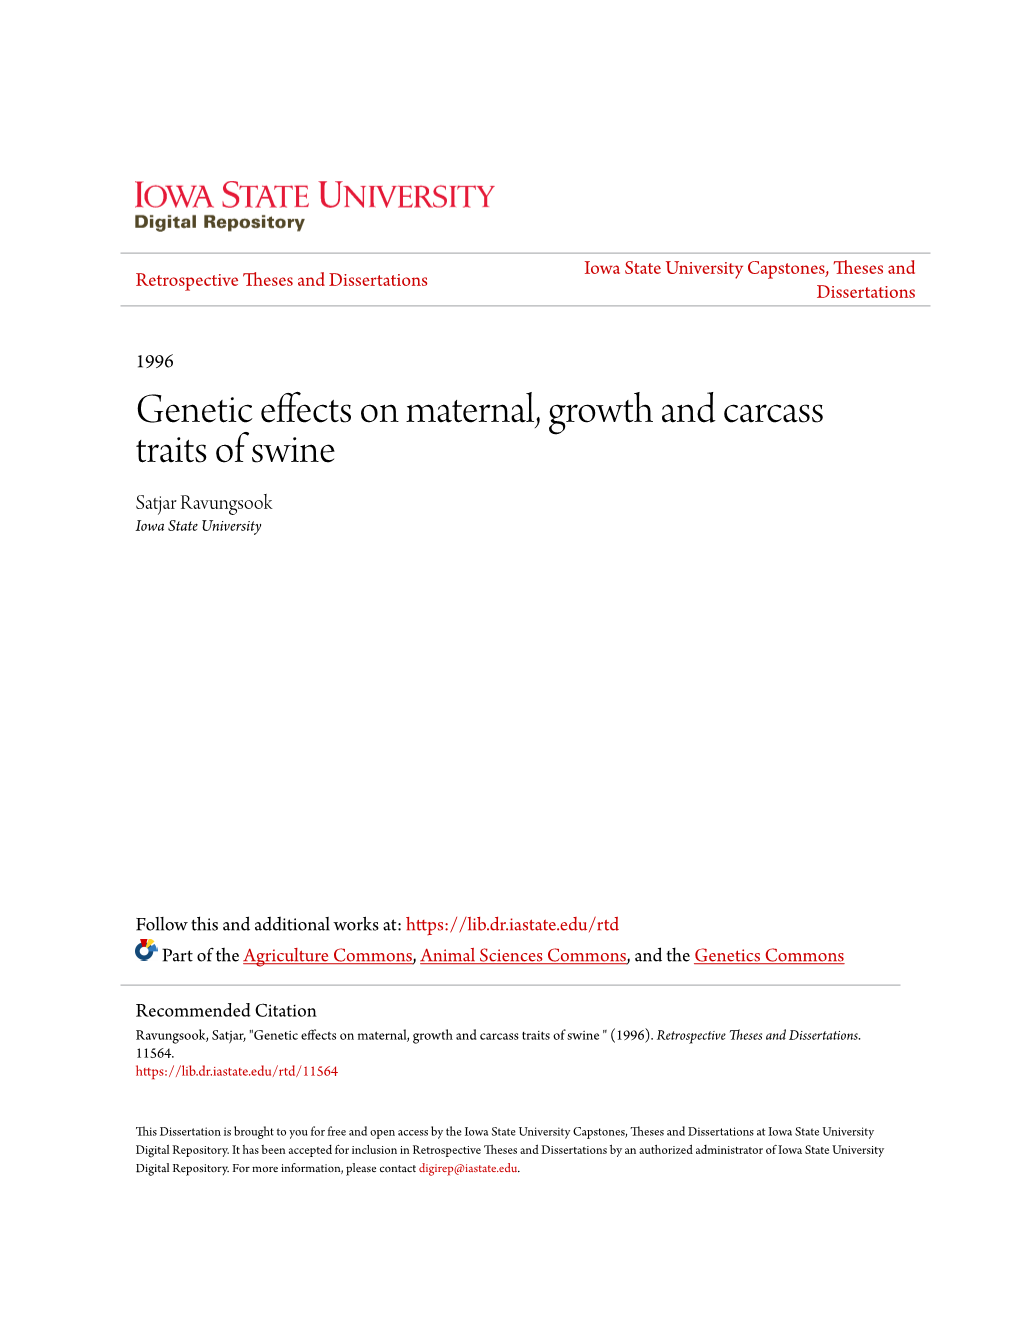 Genetic Effects on Maternal, Growth and Carcass Traits of Swine Satjar Ravungsook Iowa State University